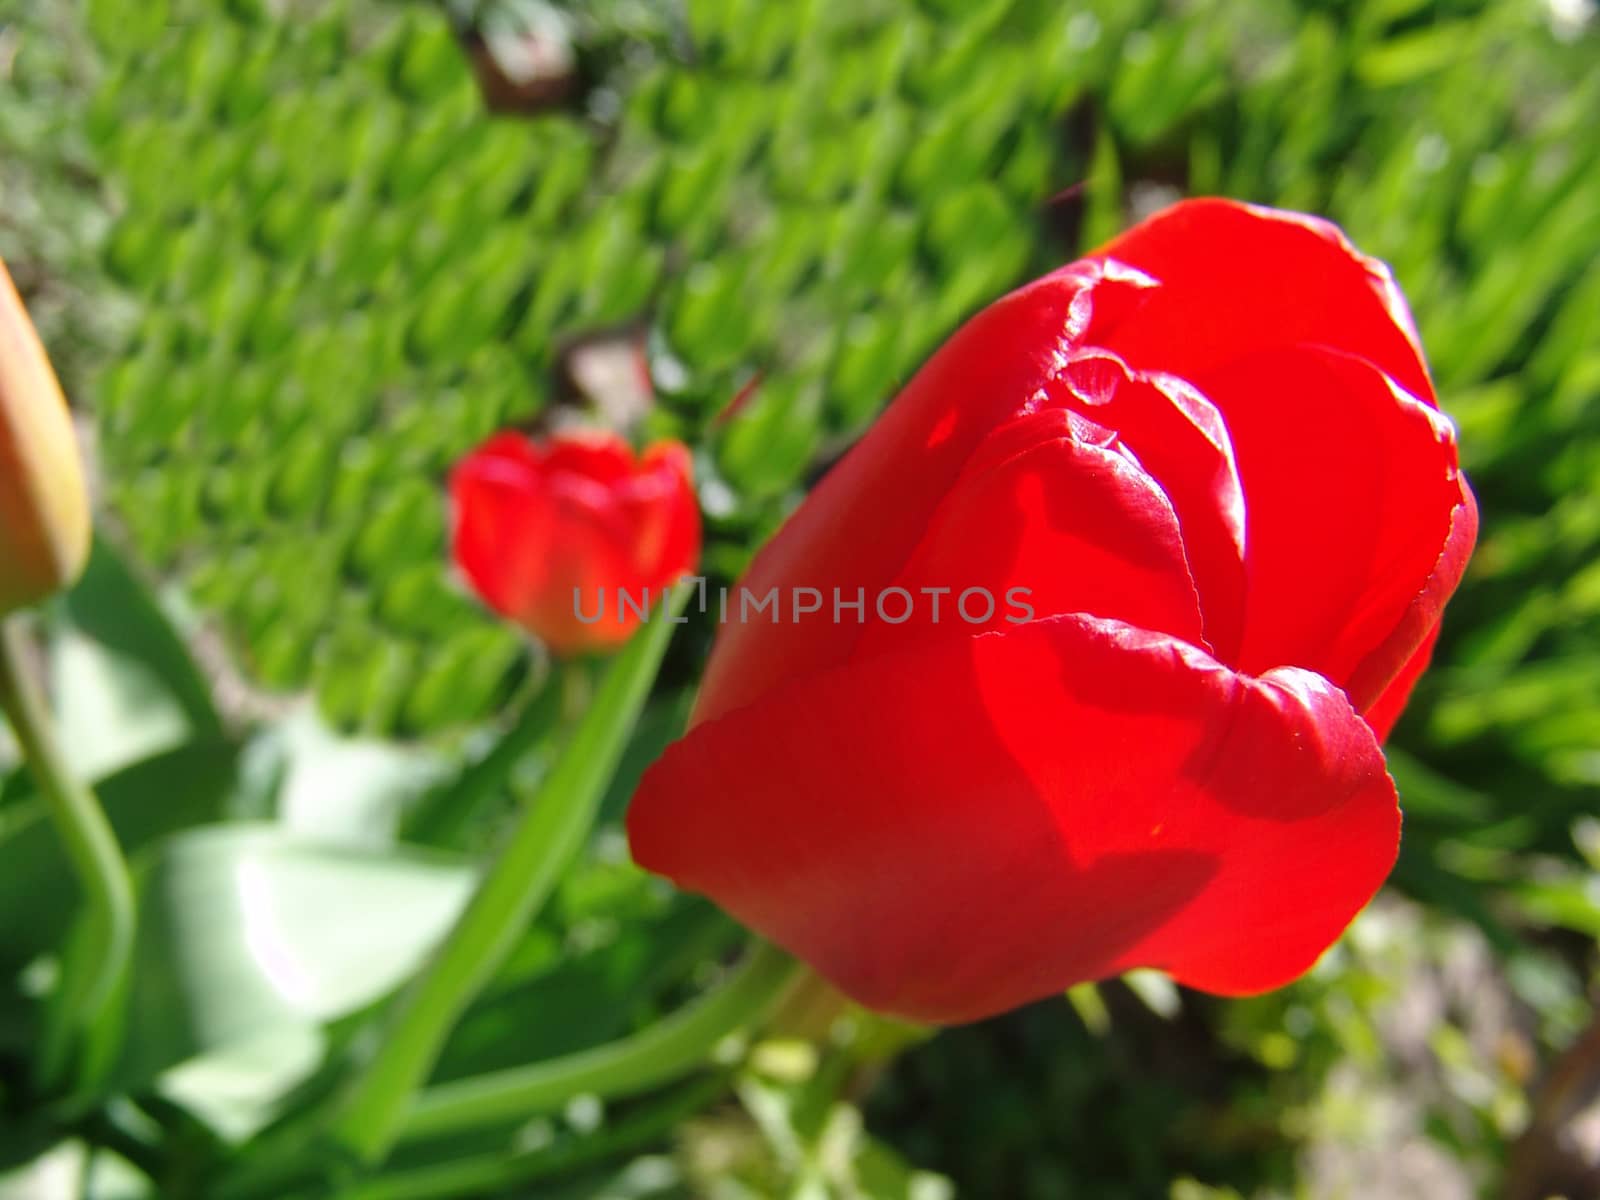 Fresh tulips in warm sun light by elena_vz